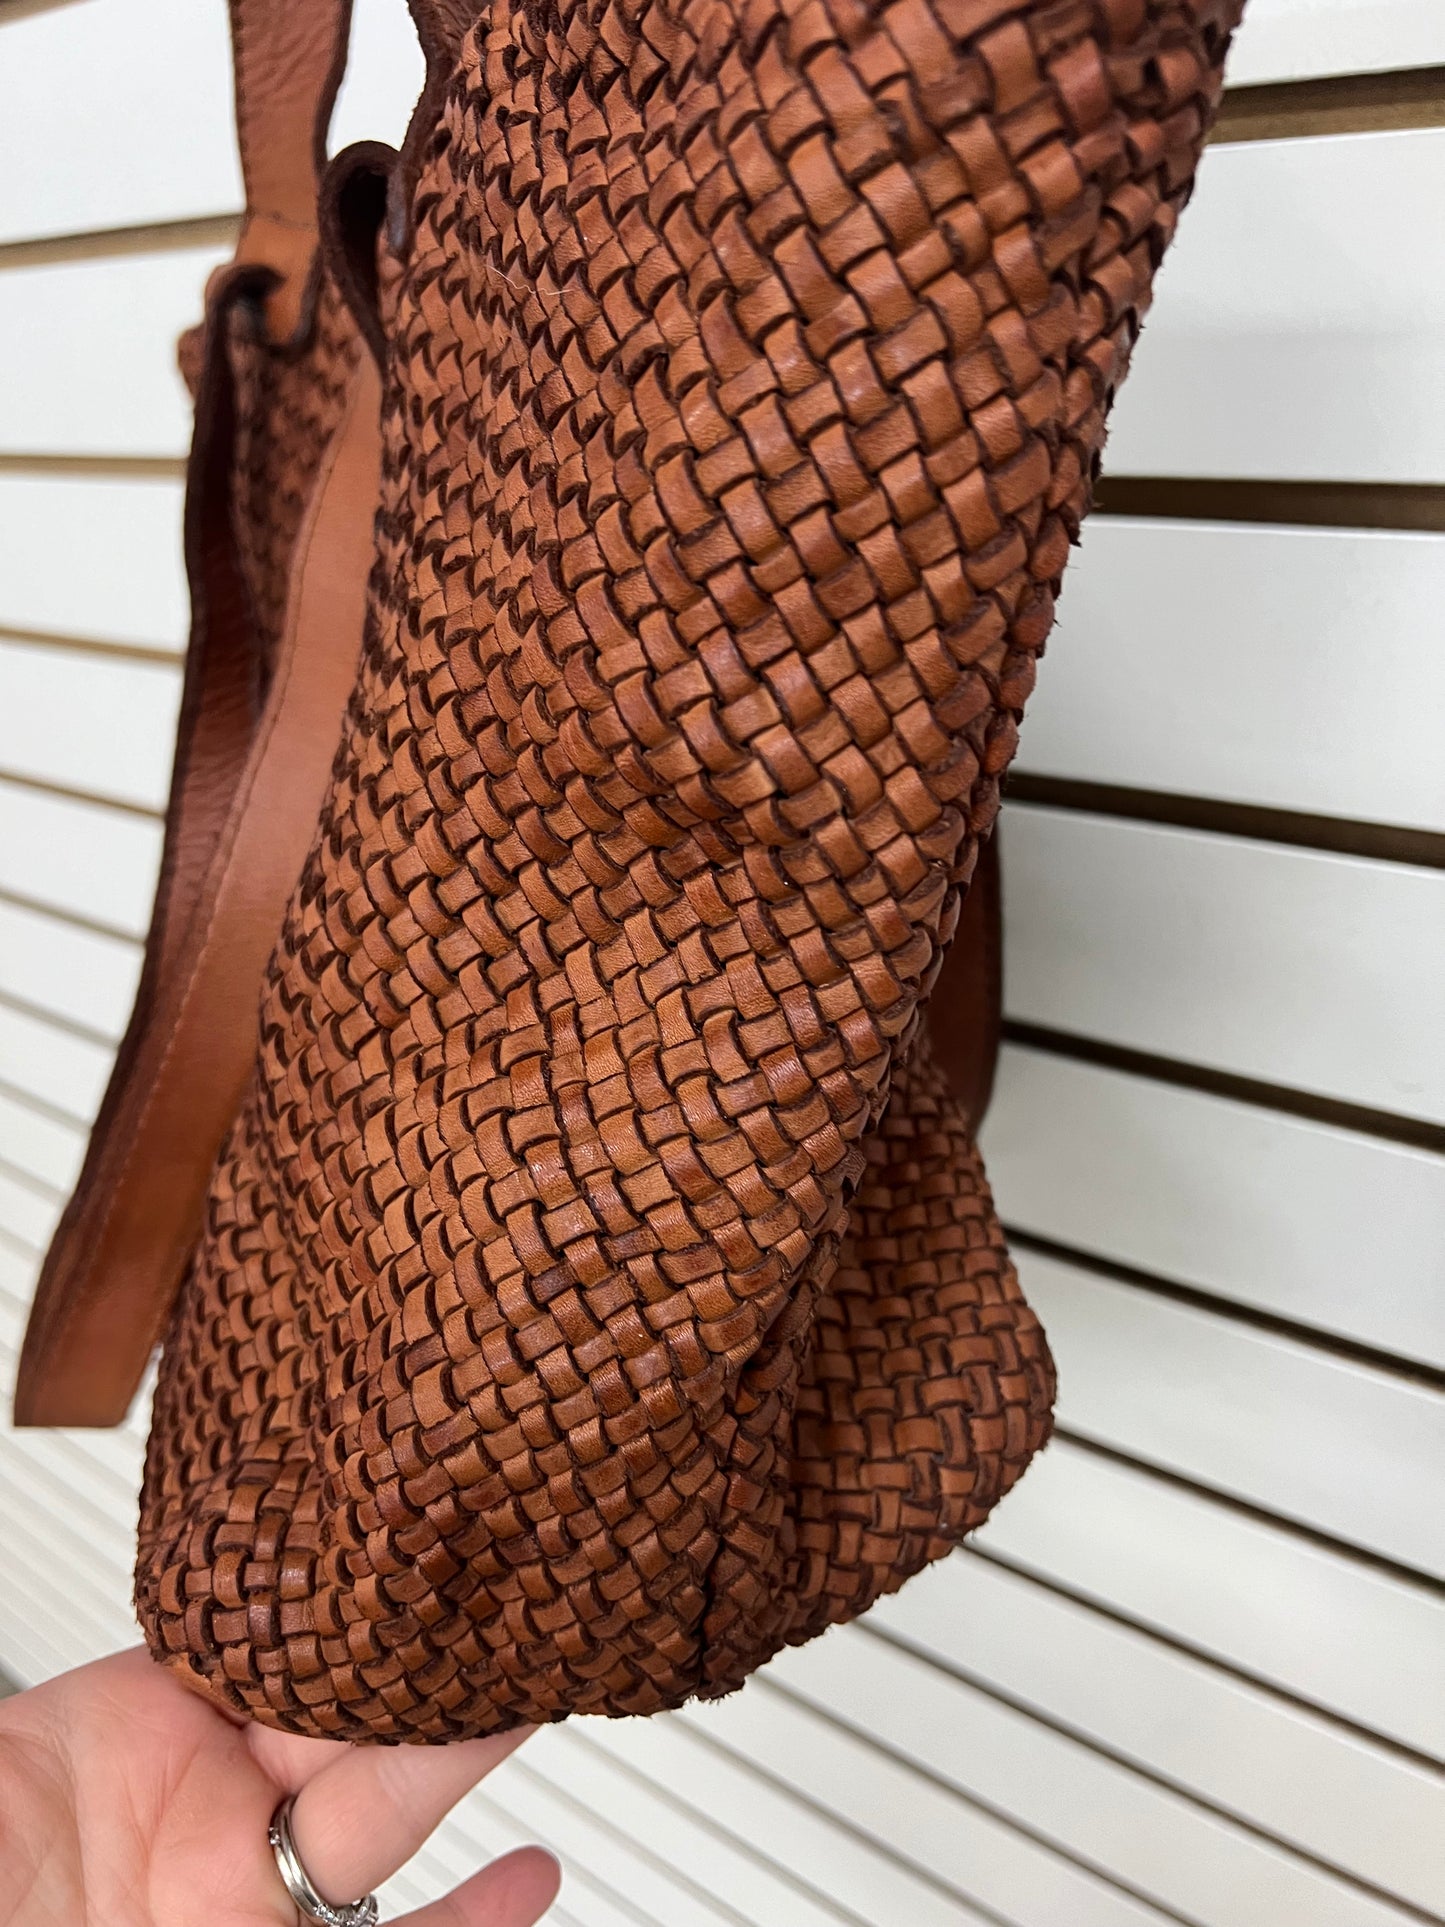 Handbag Leather By Sundance  Size: Medium